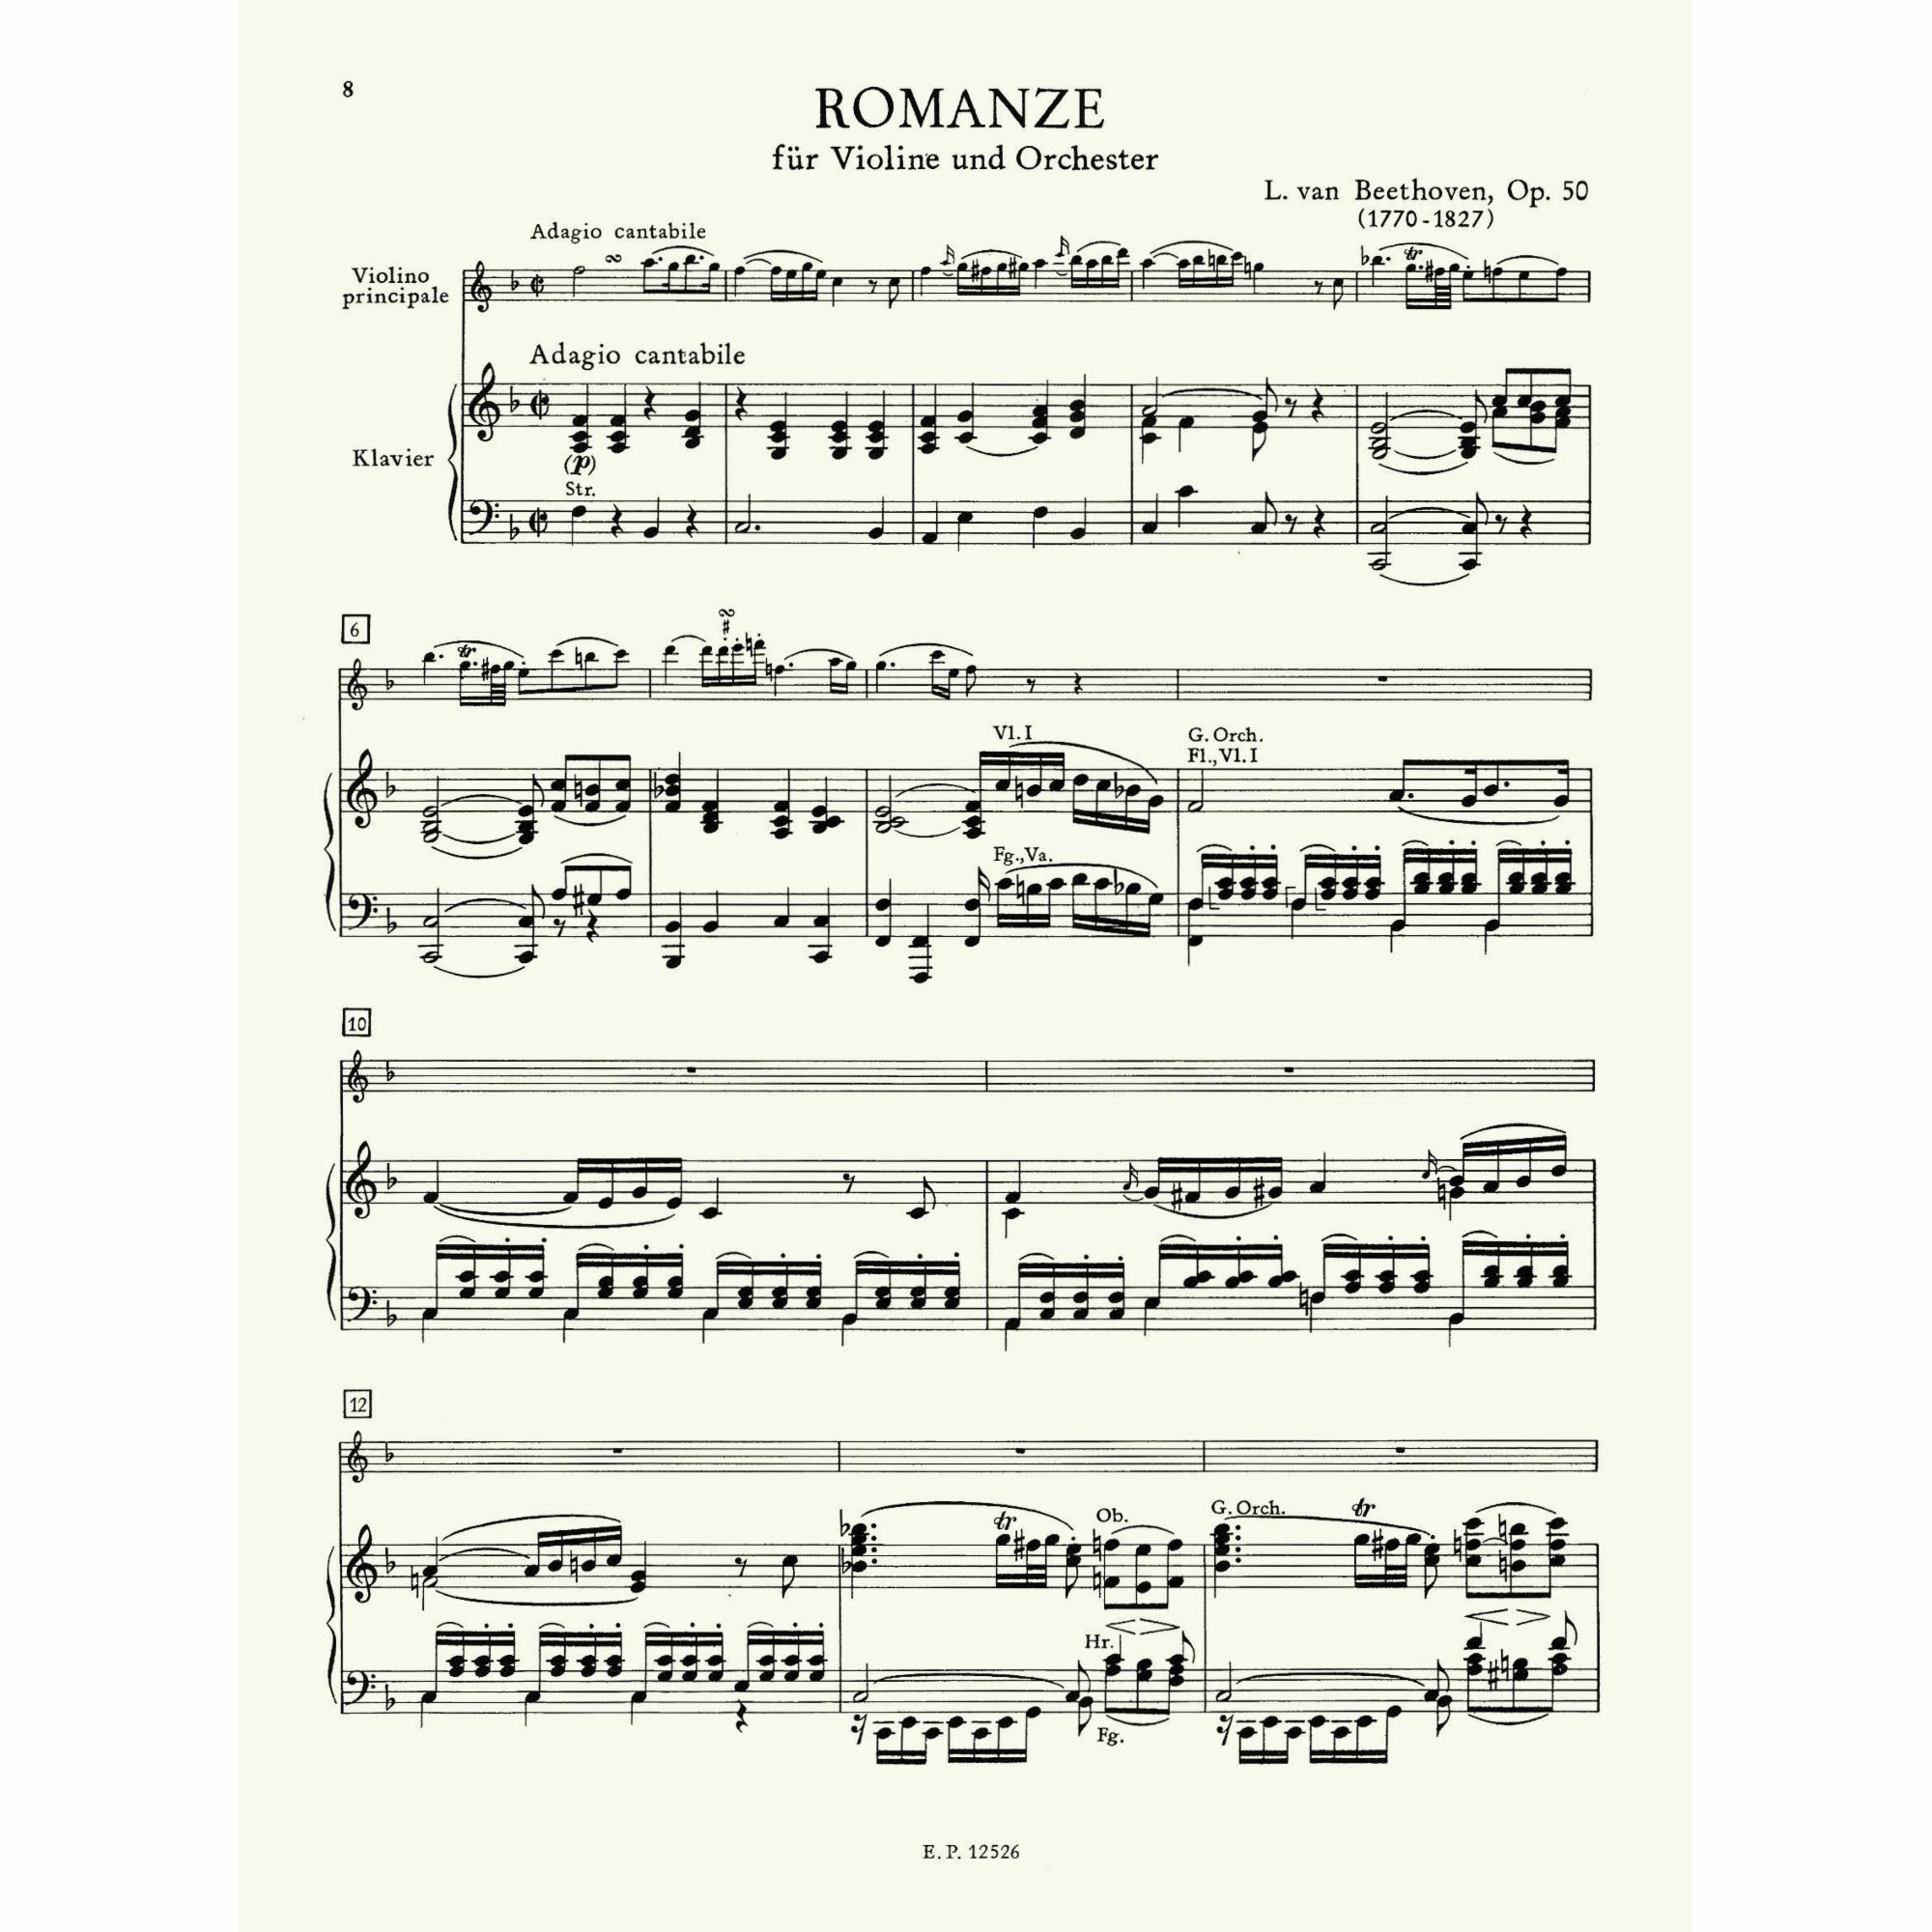 Sample: Piano (Pg. 8)